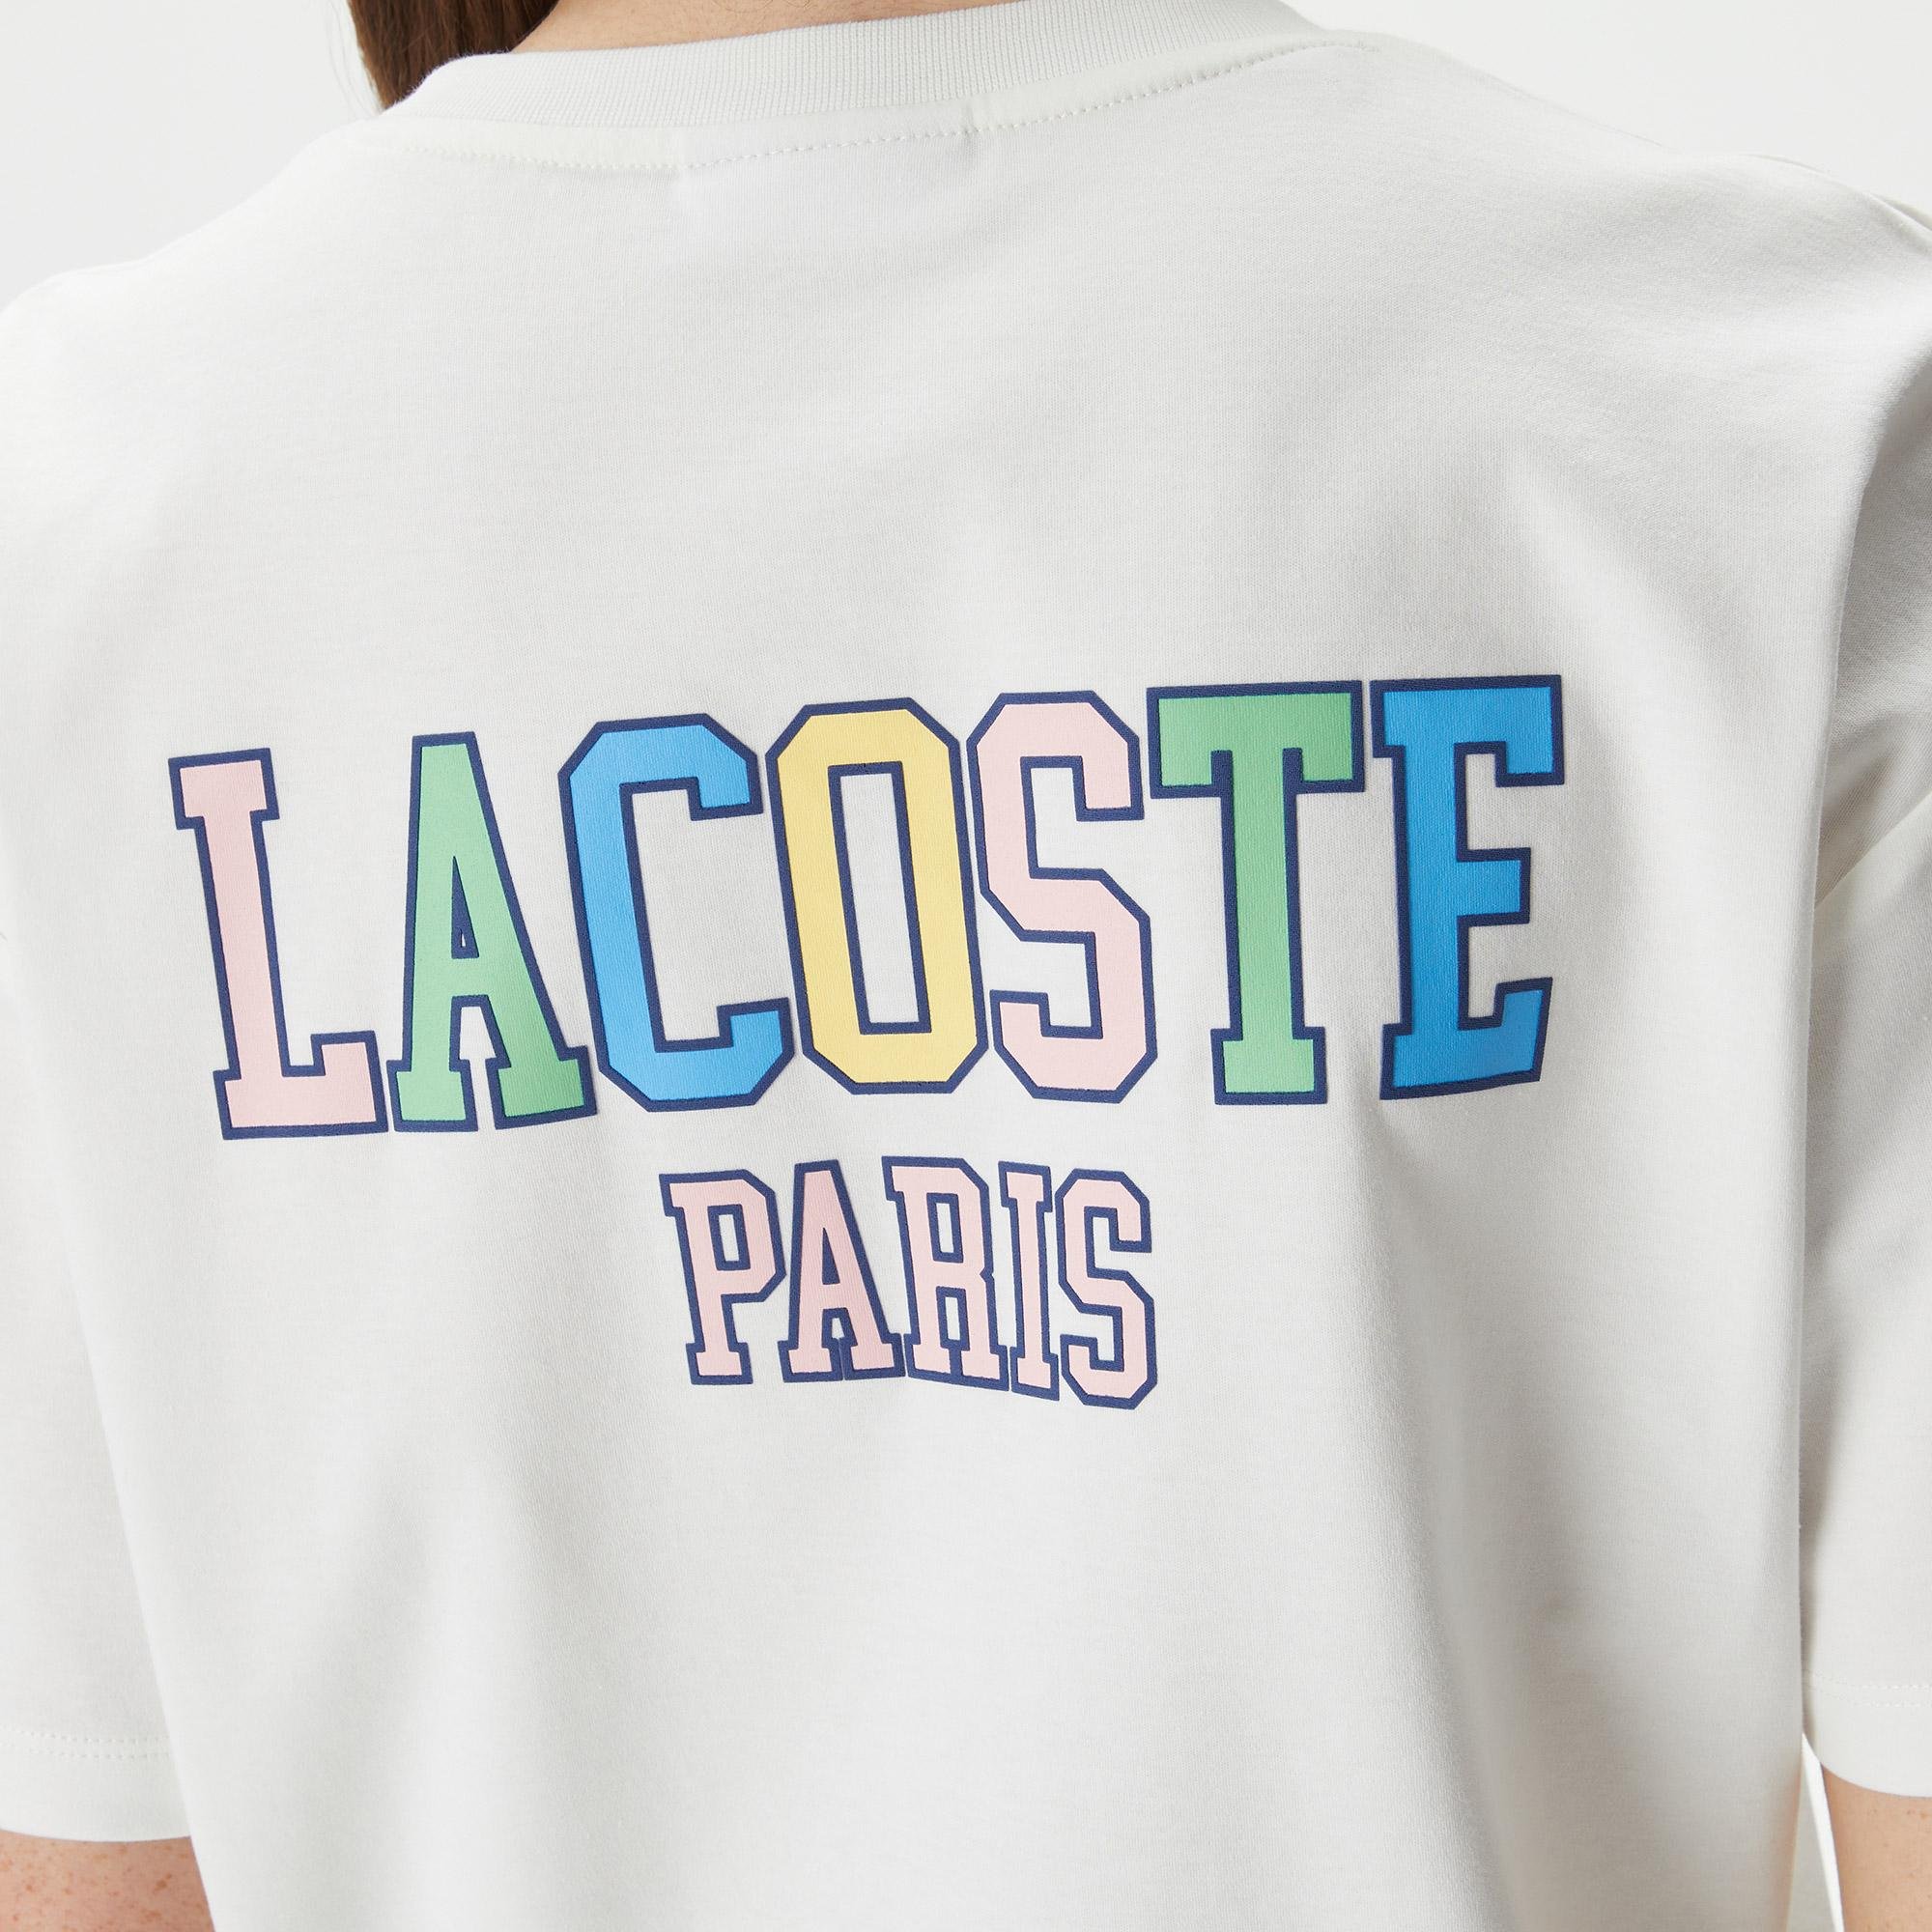 Lacoste Women's Loose Fit T-shirt